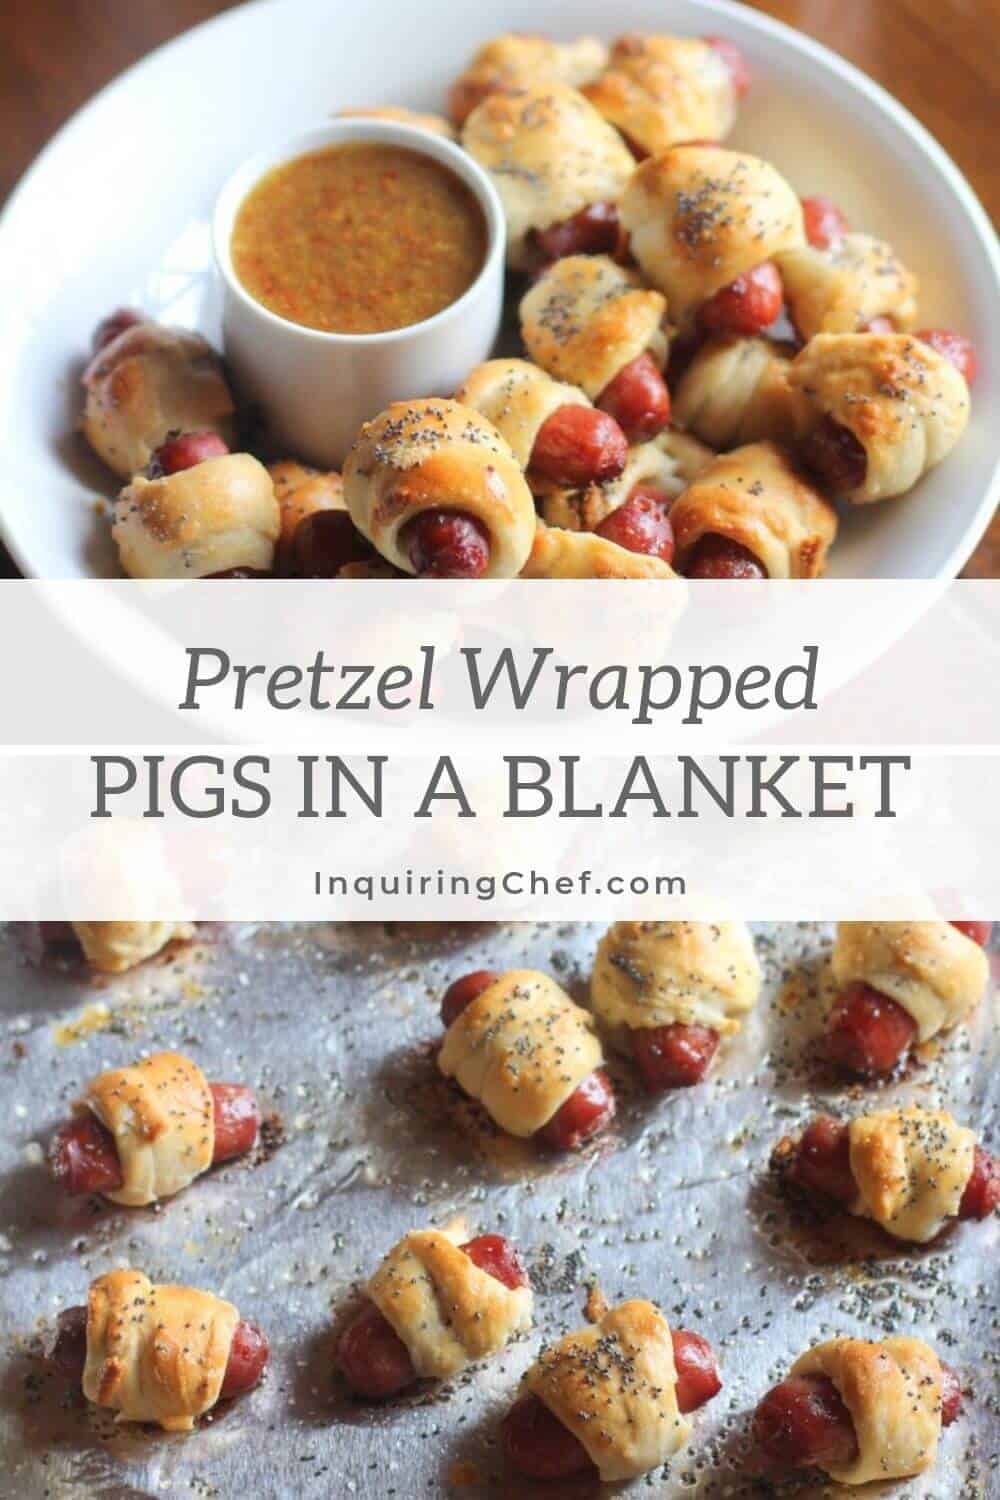 Pretzel-Wrapped Pigs in a Blanket